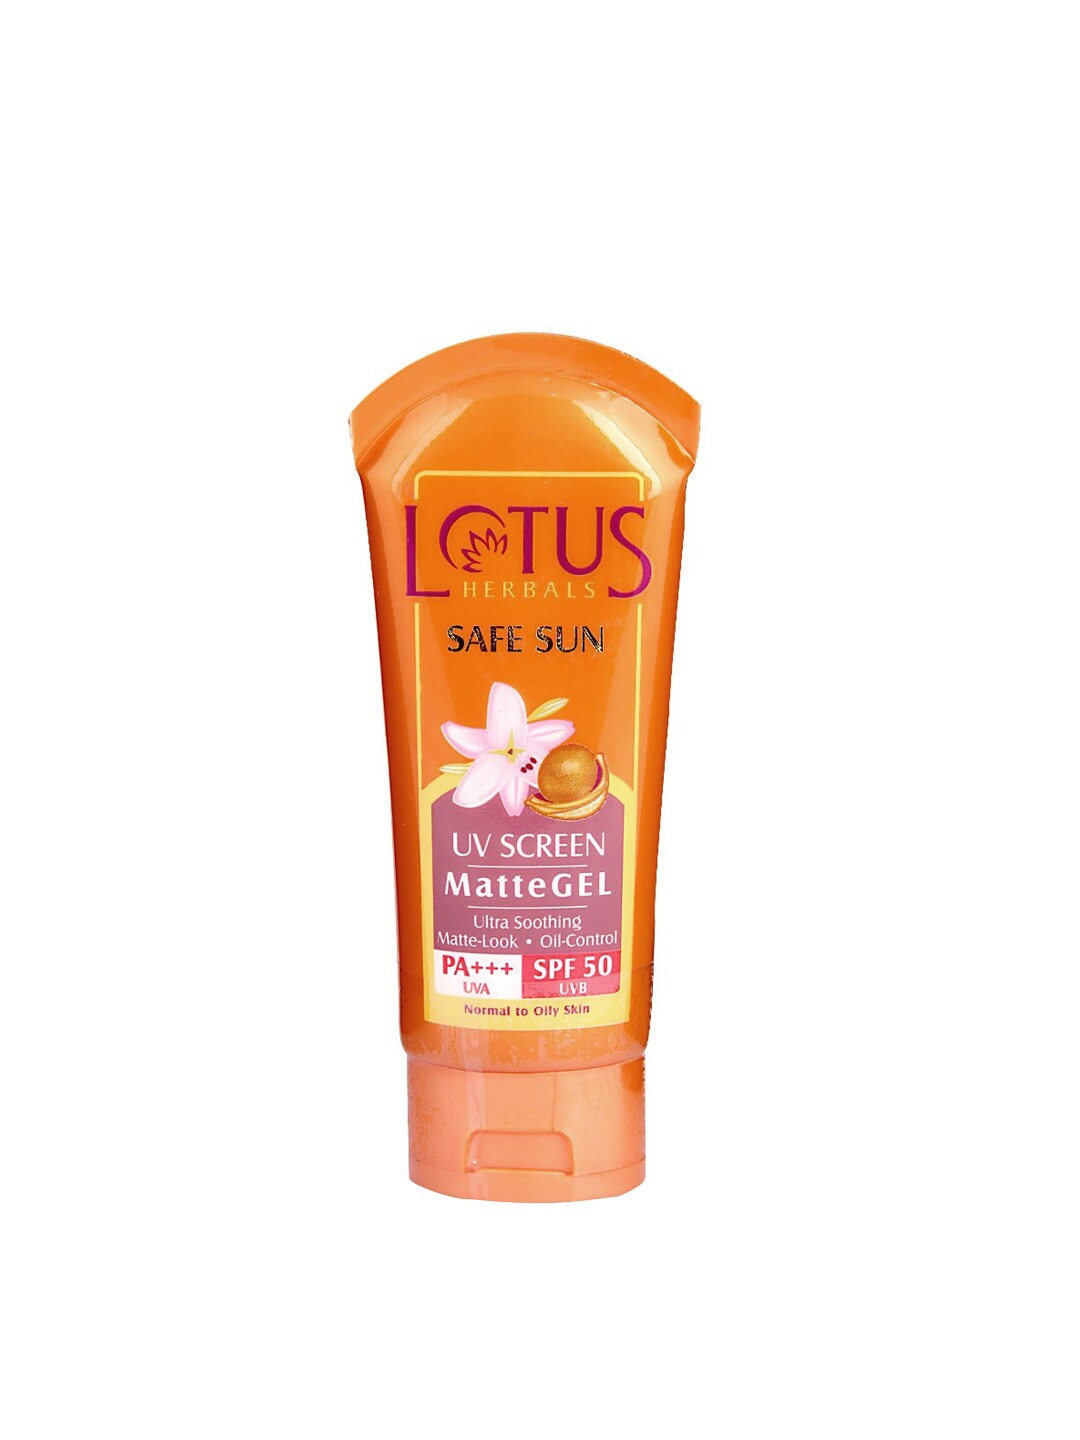 Lotus Herbals UV Screen Matte Gel 50g